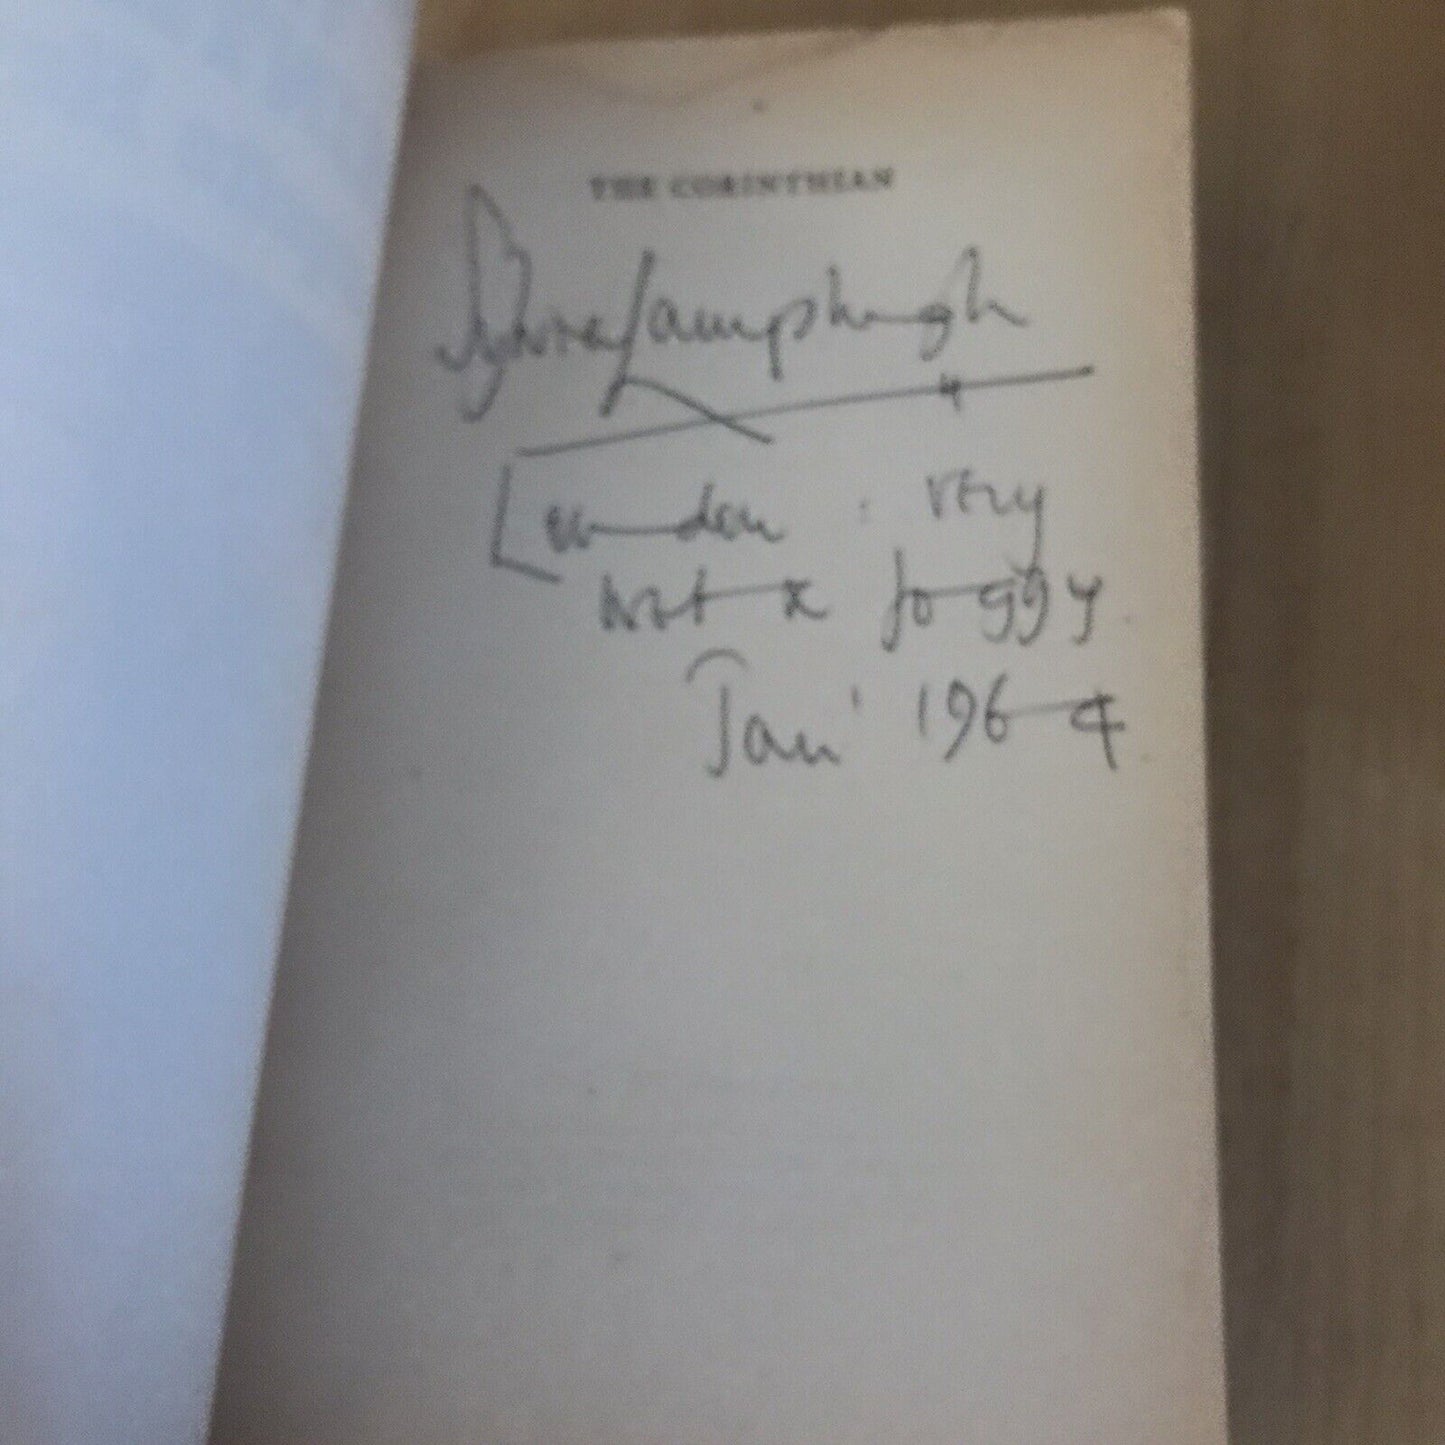 1963 The Corinthian – Georgette Heyer (Pan Books)